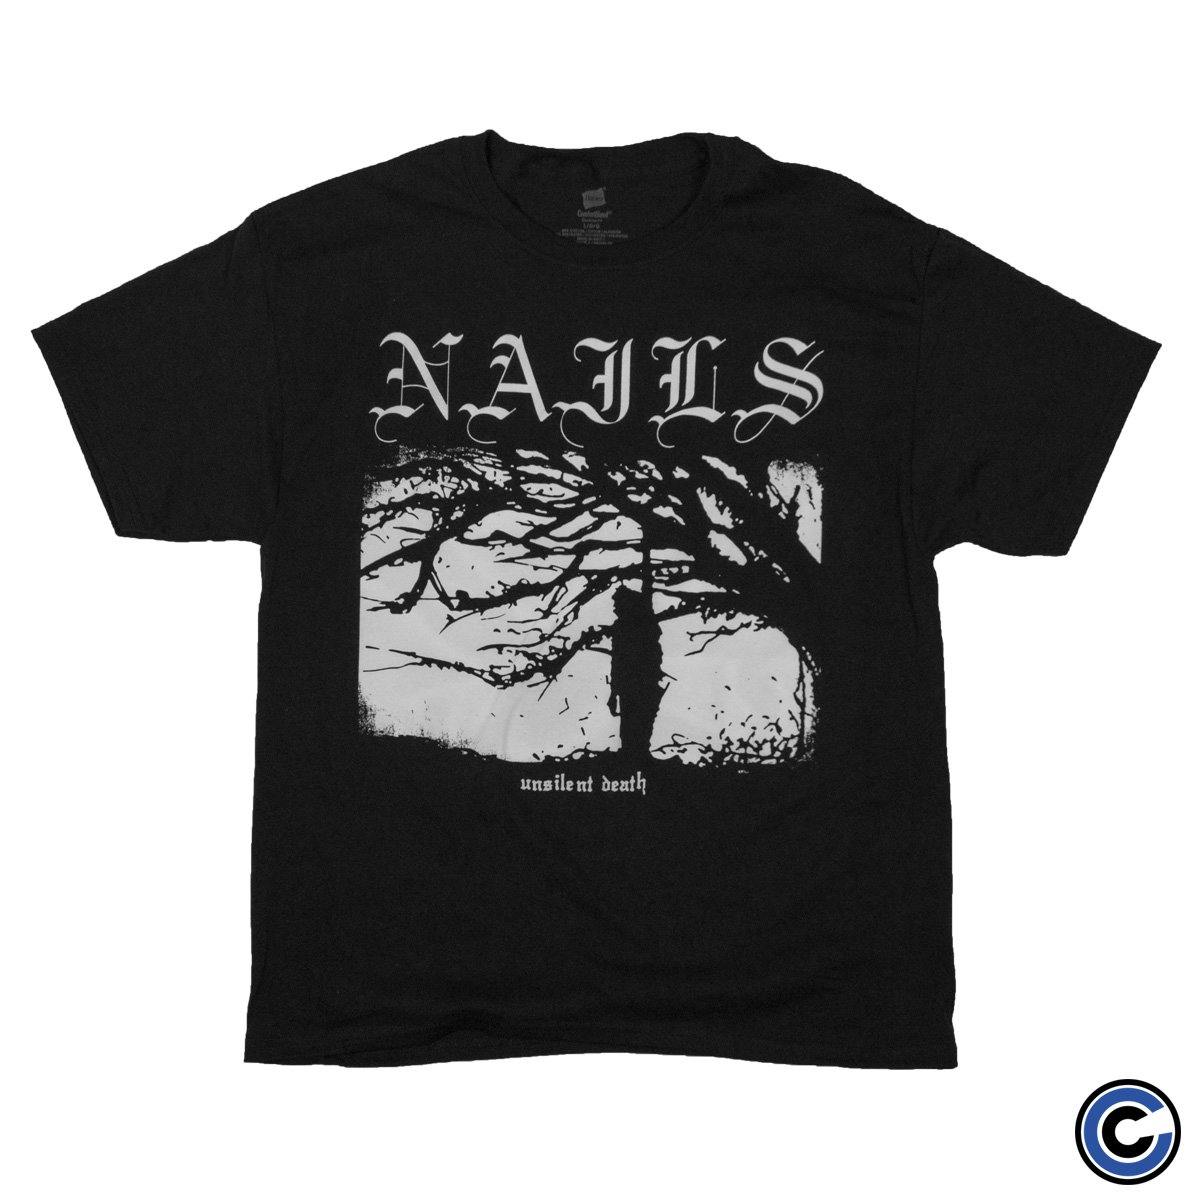 Buy – Nails "Unsilent Death" Shirt – Band & Music Merch – Cold Cuts Merch